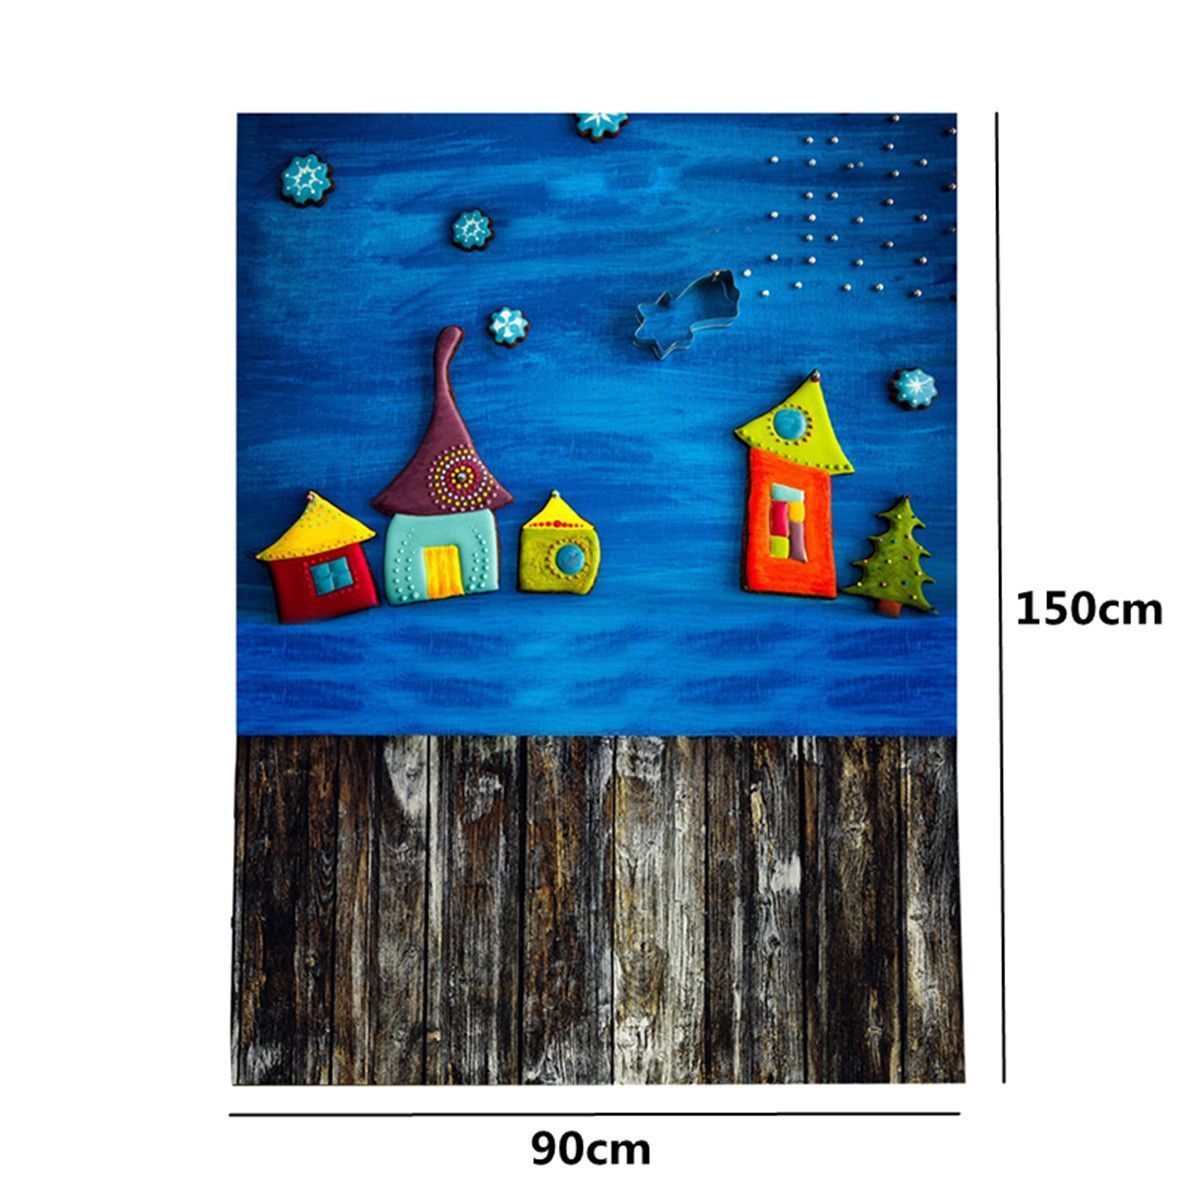 3x5FT-Child-Blue-Sky-Funny-House-Photography-Backdrop-Photo-Studio-Background-1168246